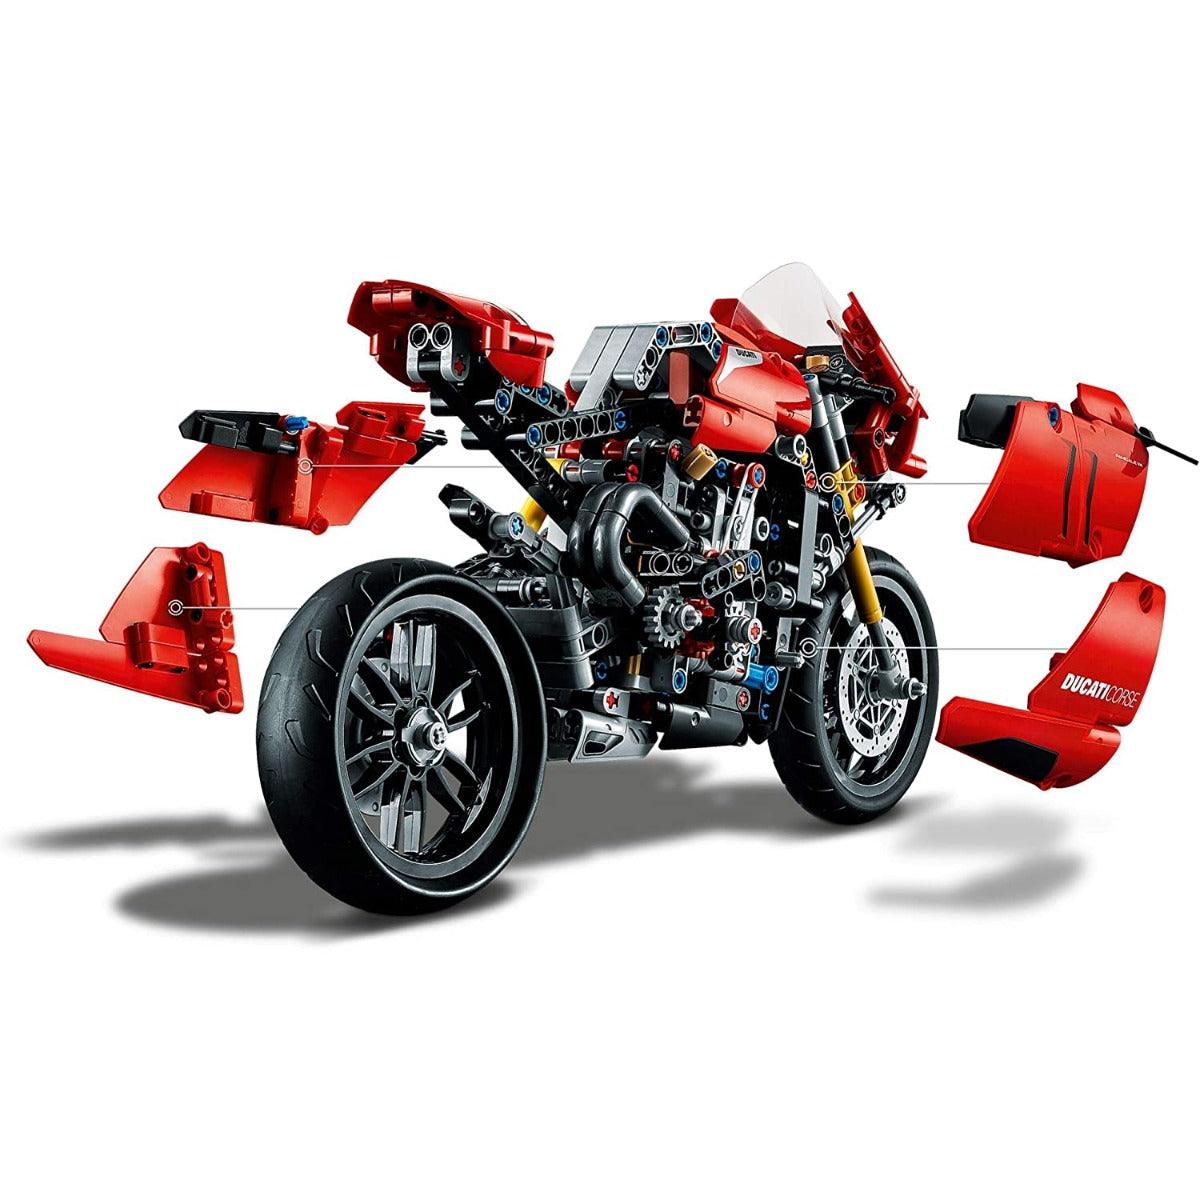 LEGO Technic Ducati Panigale V4 R